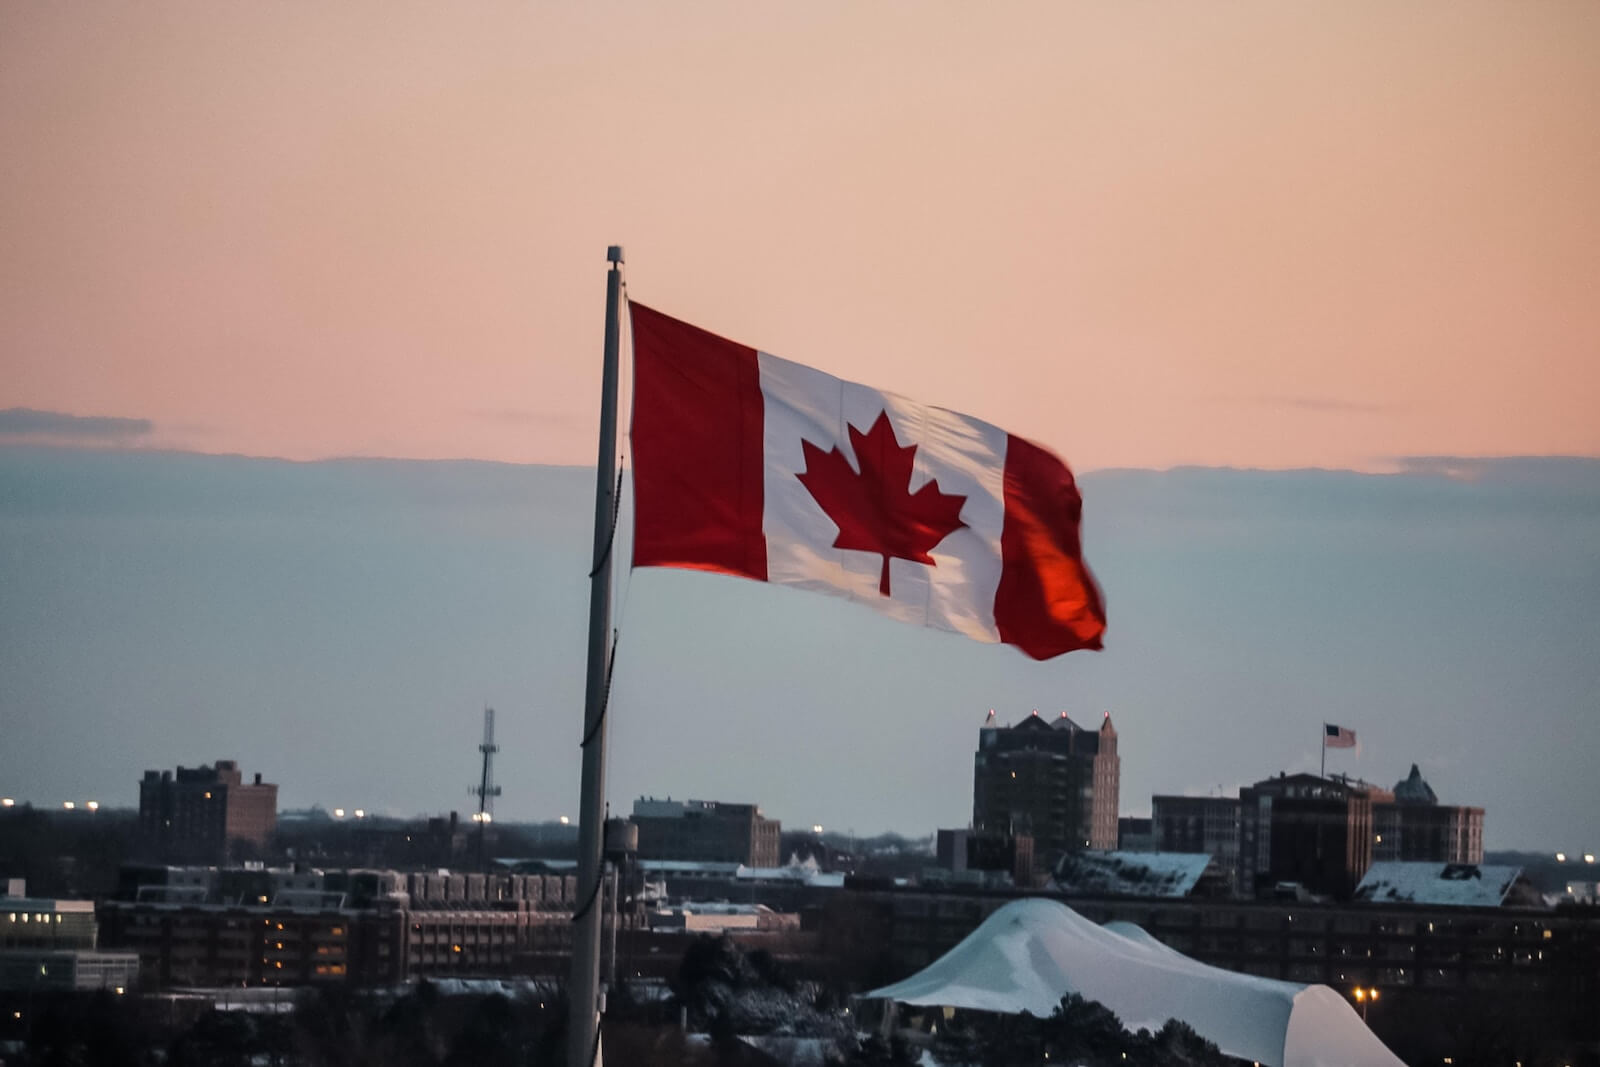 Waving Canada flag photo by sebastiaan stam on Unsplash